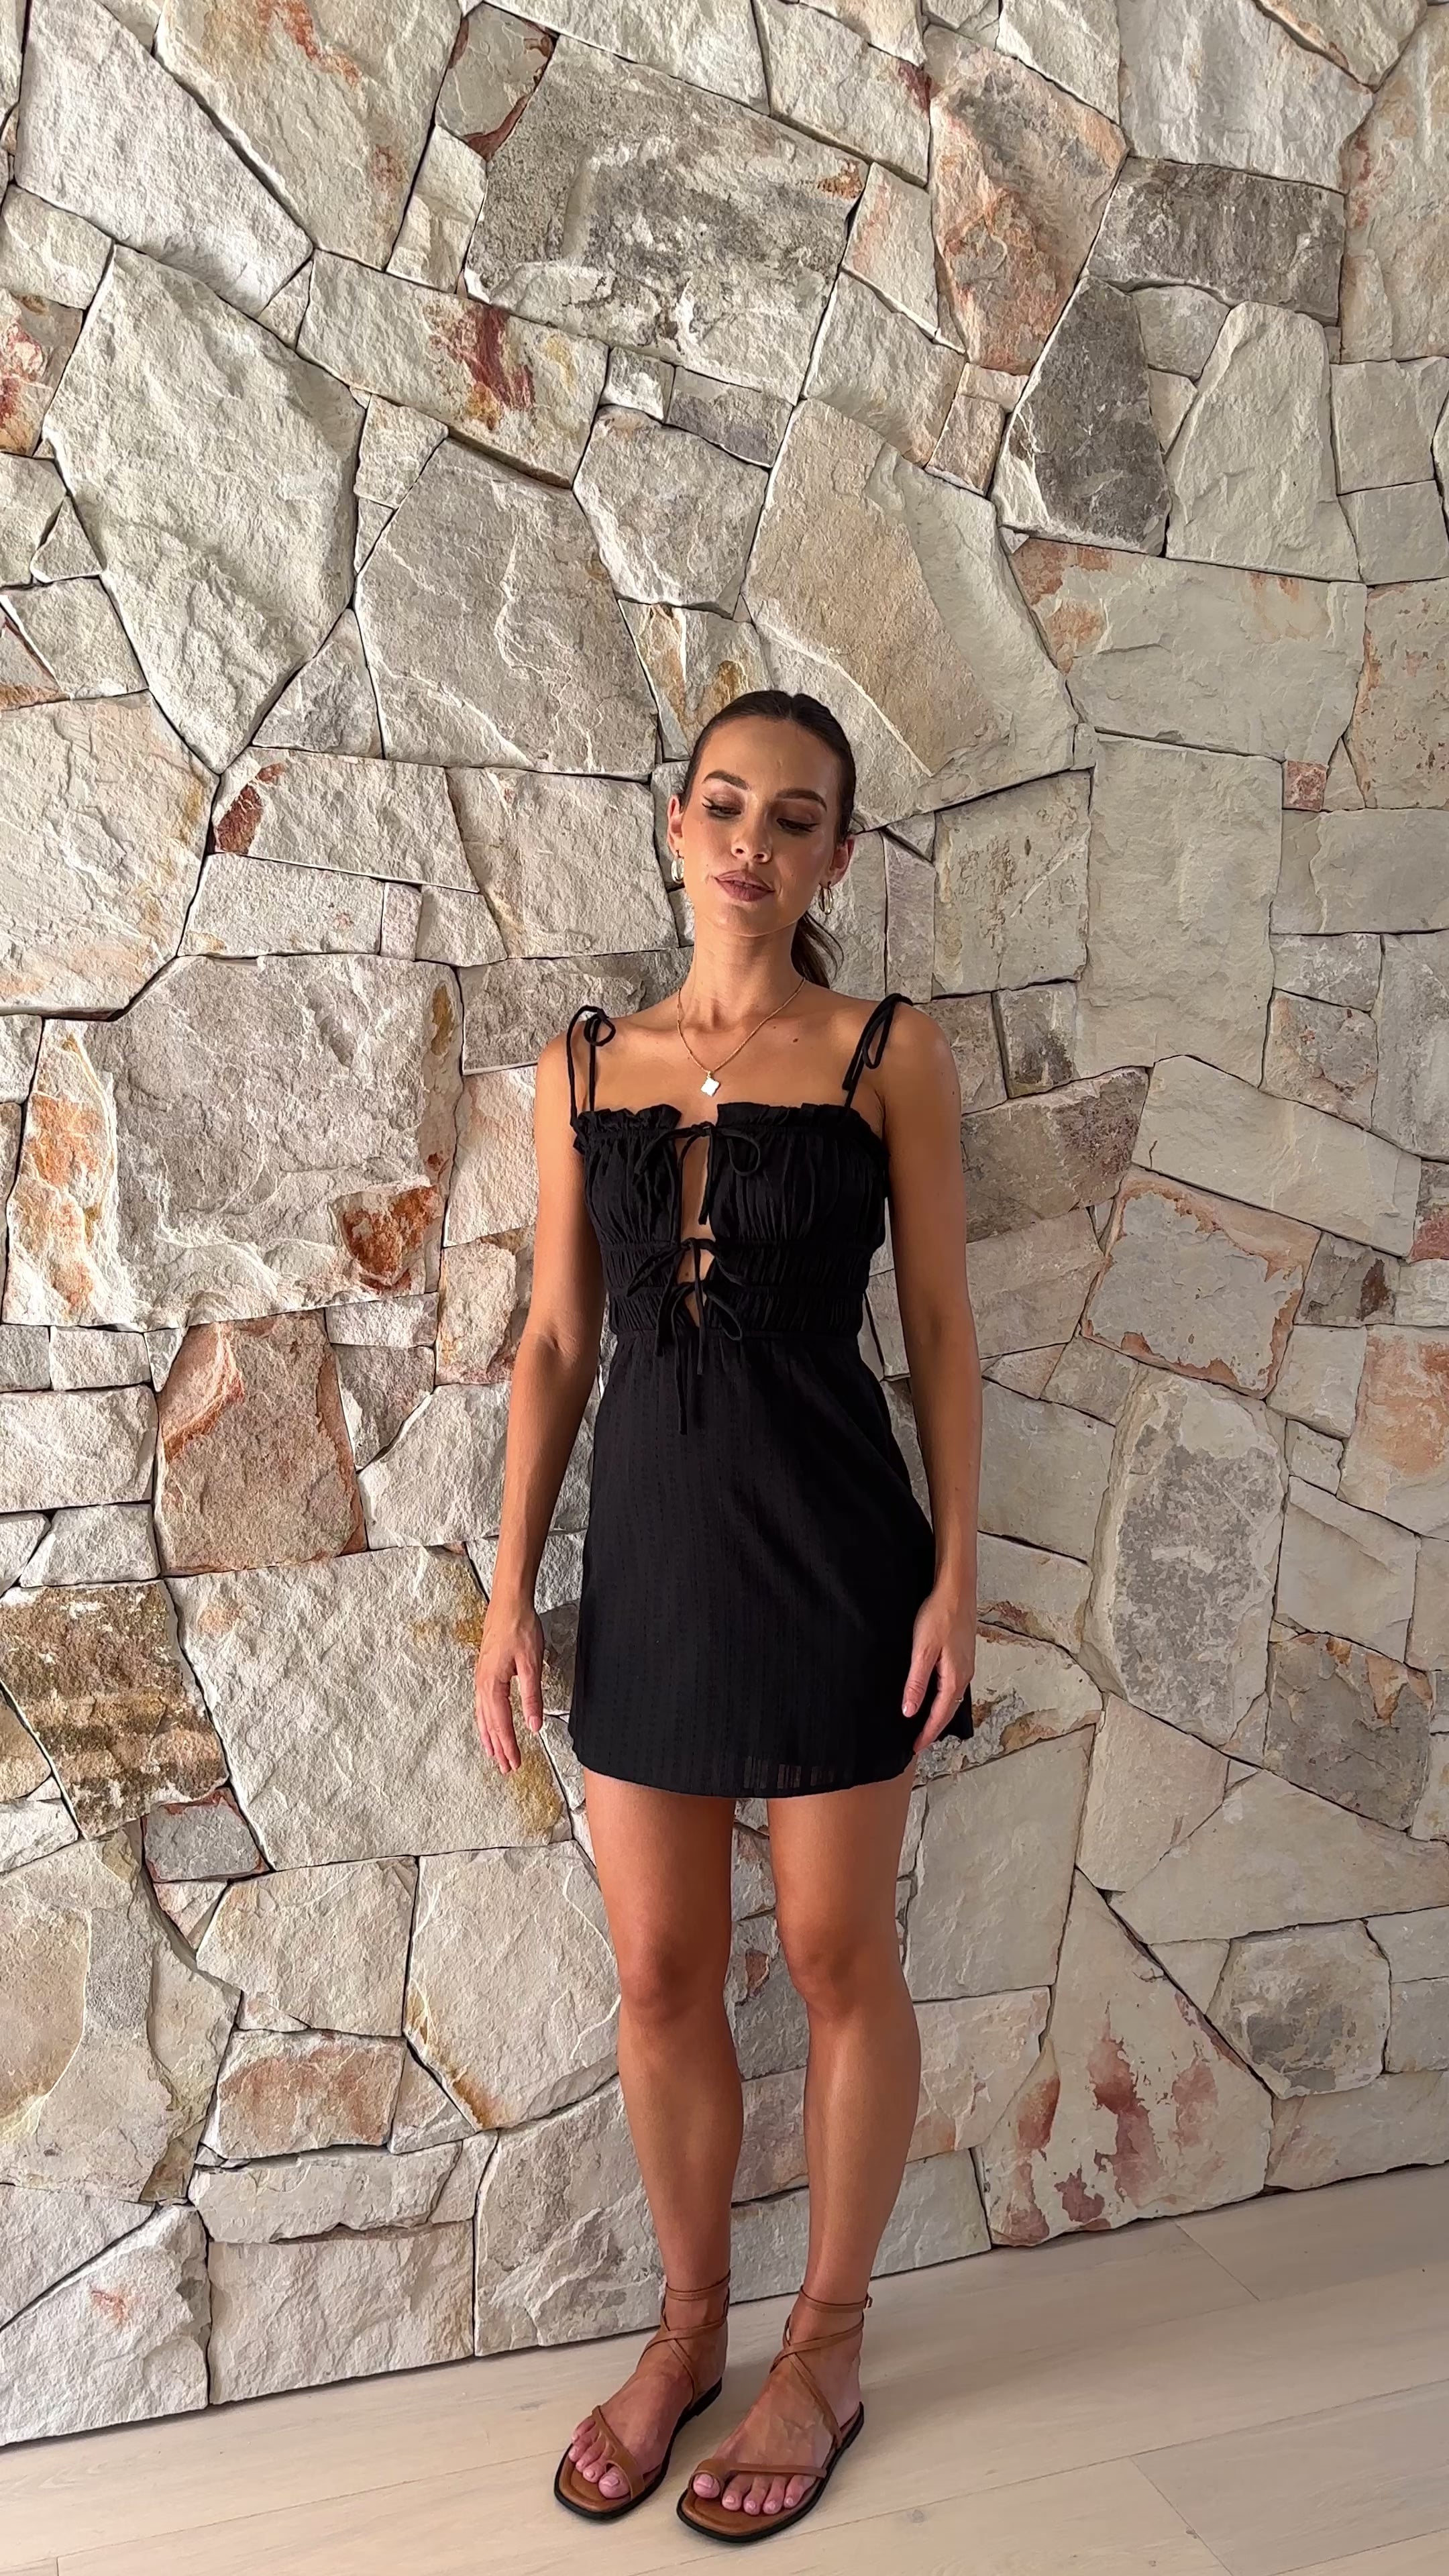 Francesca Mini Dress - Black